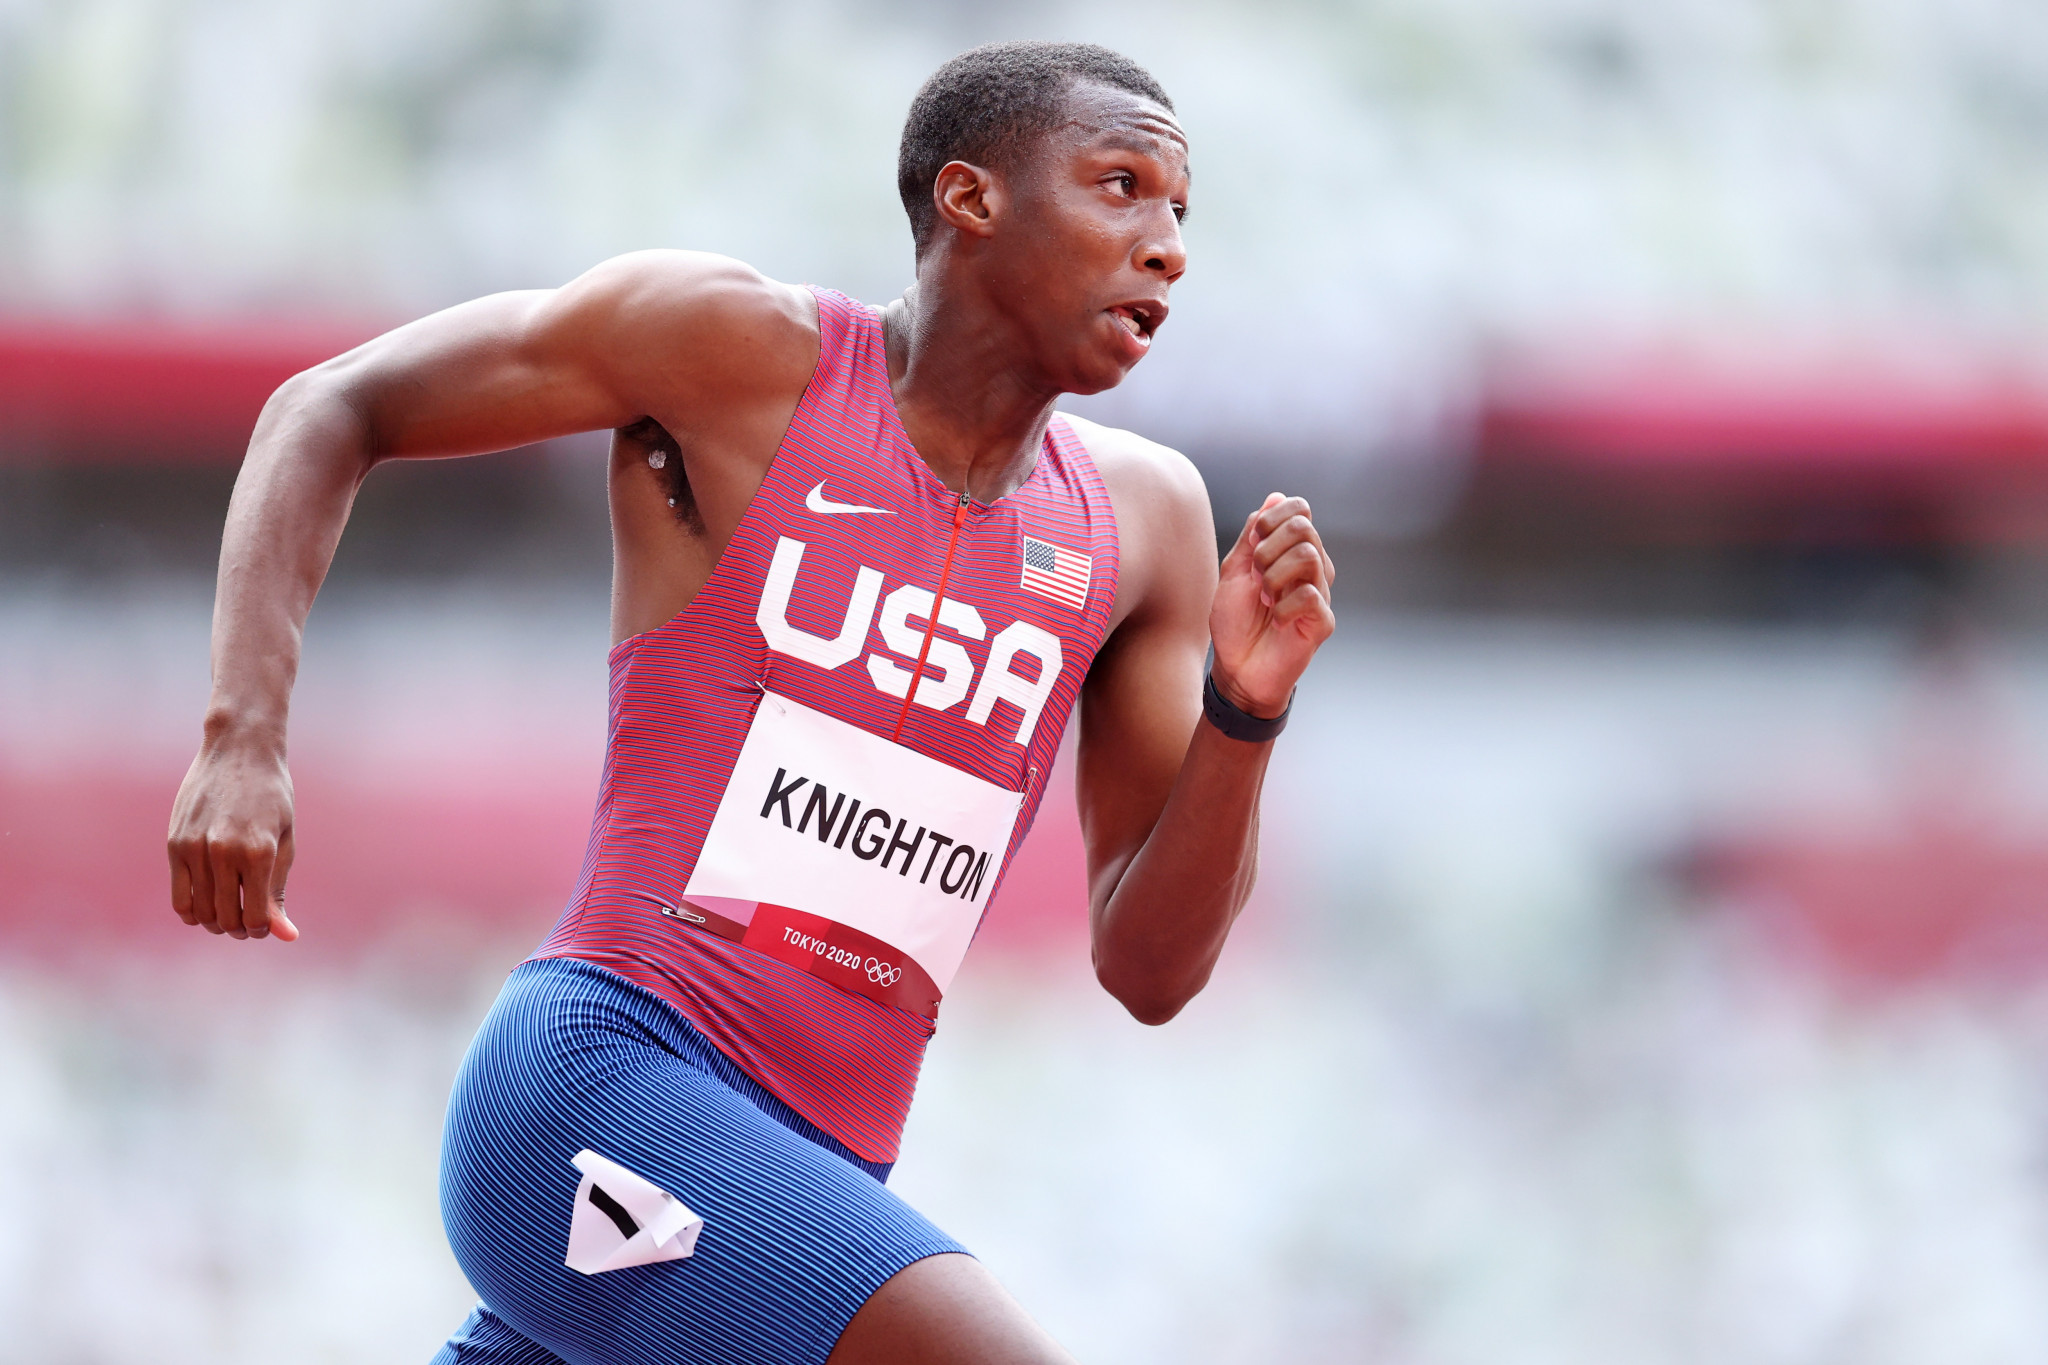 World bronze medallist Knighton leads World Athletics Men's Rising Star shortlist